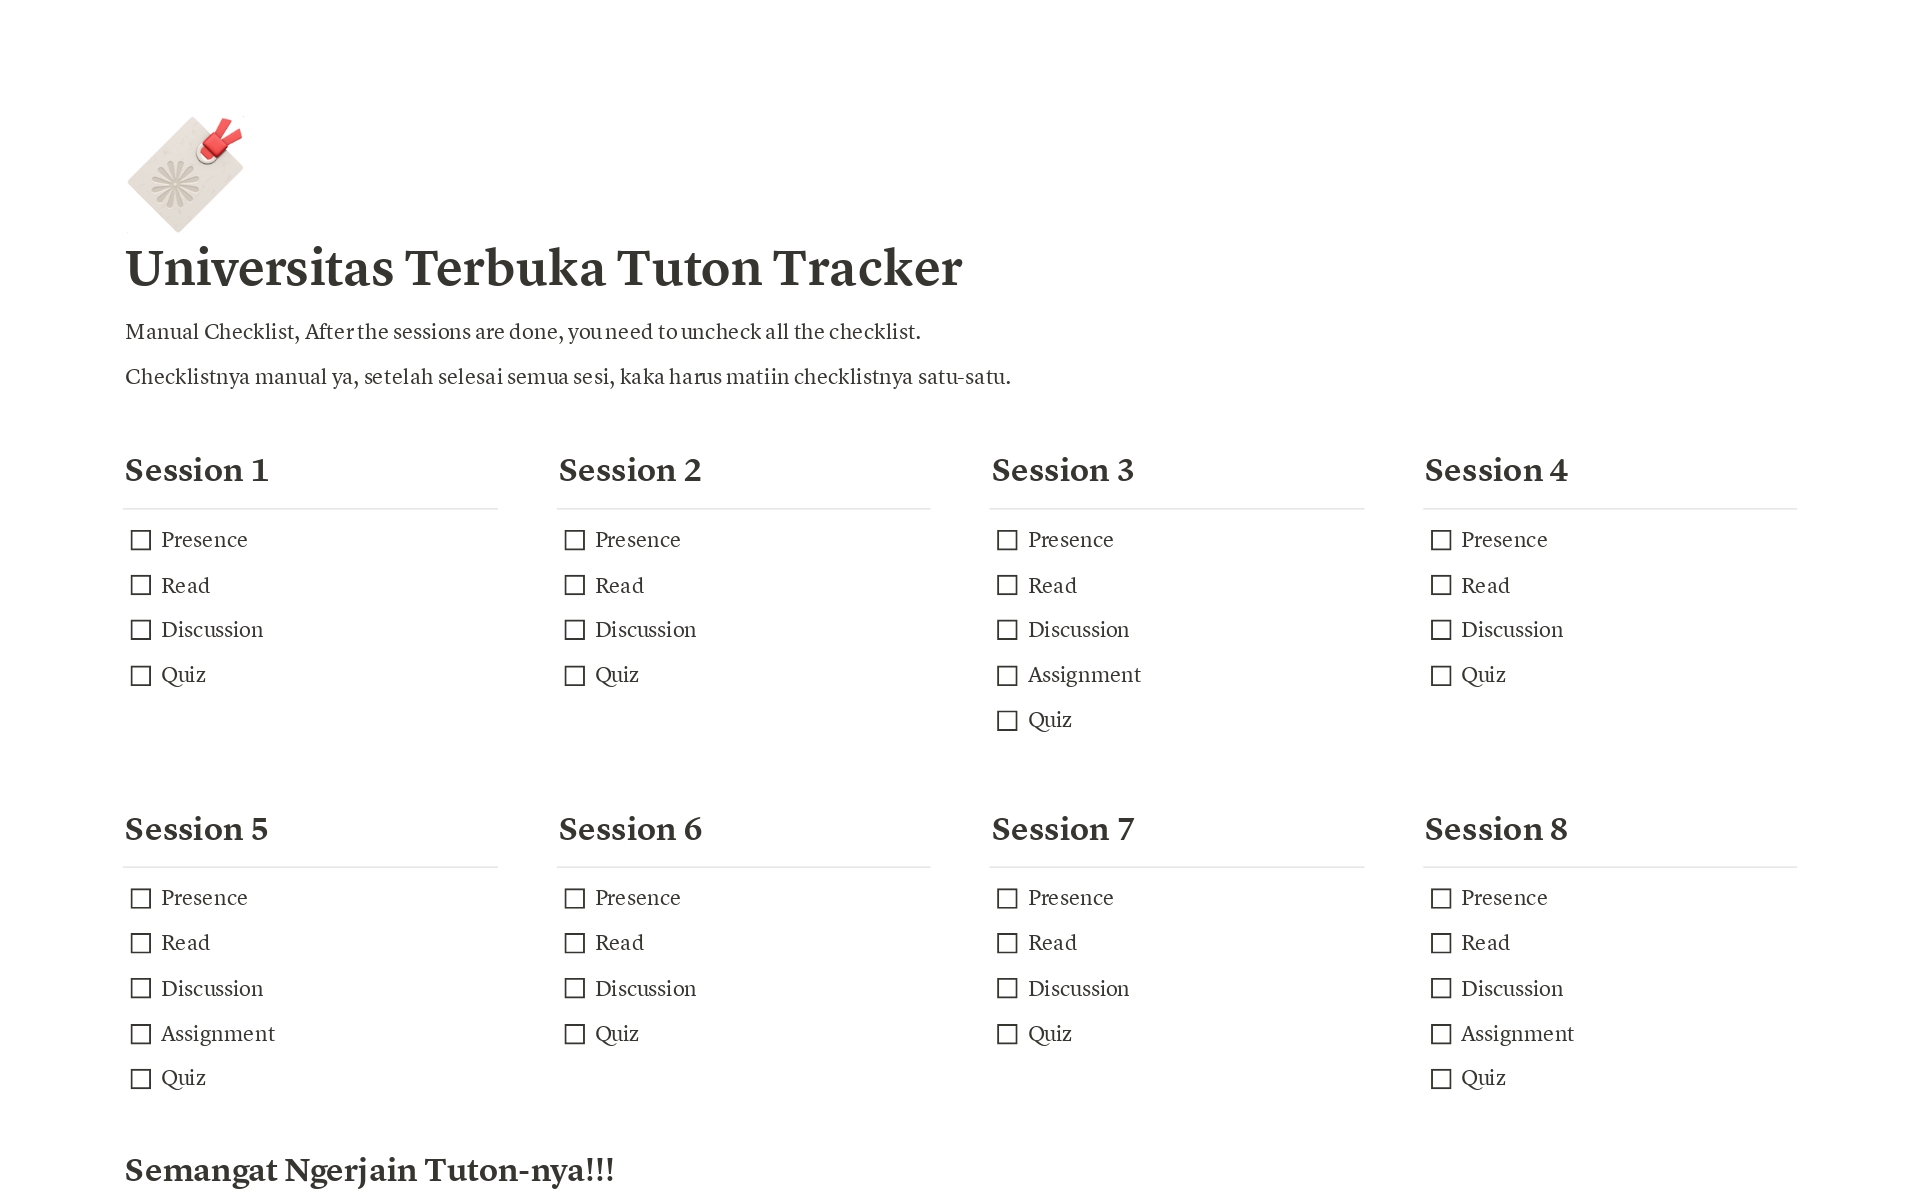 Vista previa de una plantilla para Tuton Checker for Universitas Terbuka